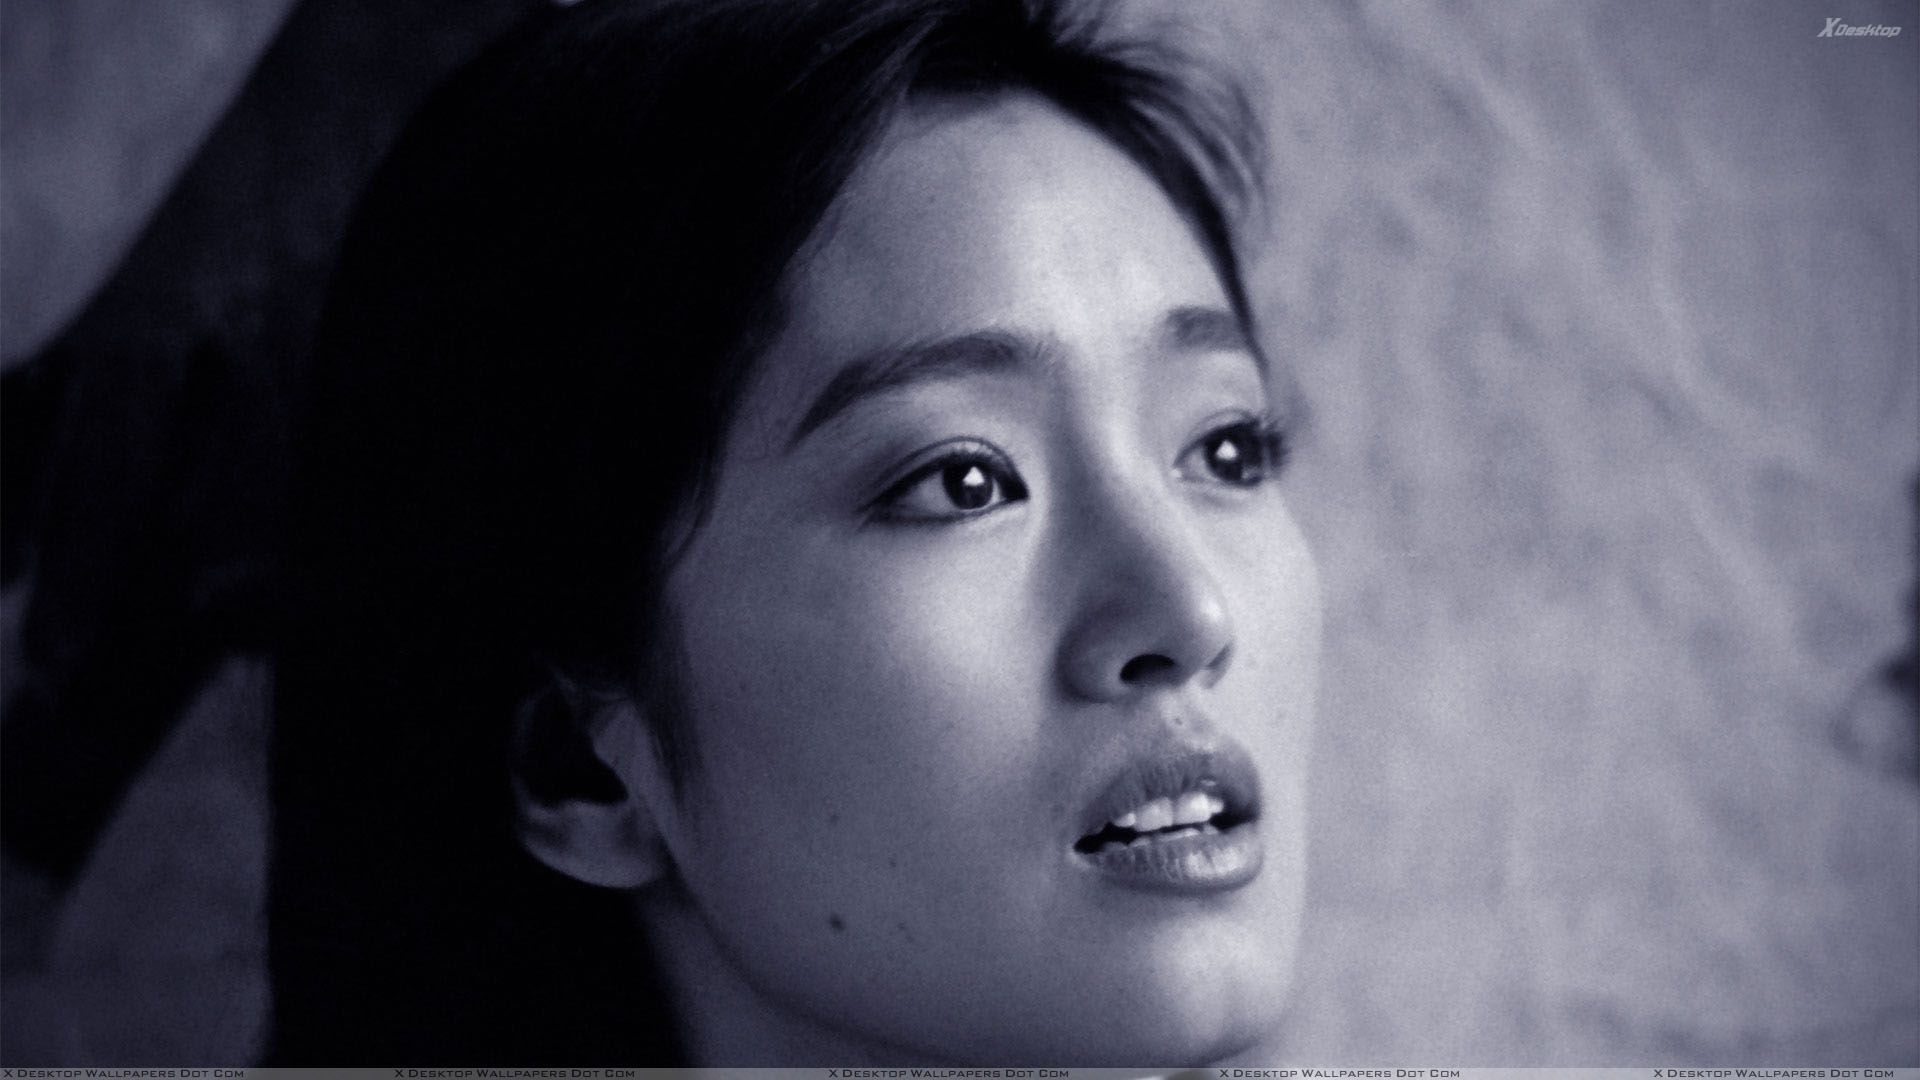 Gong Li Wallpaper, Photo & Image in HD